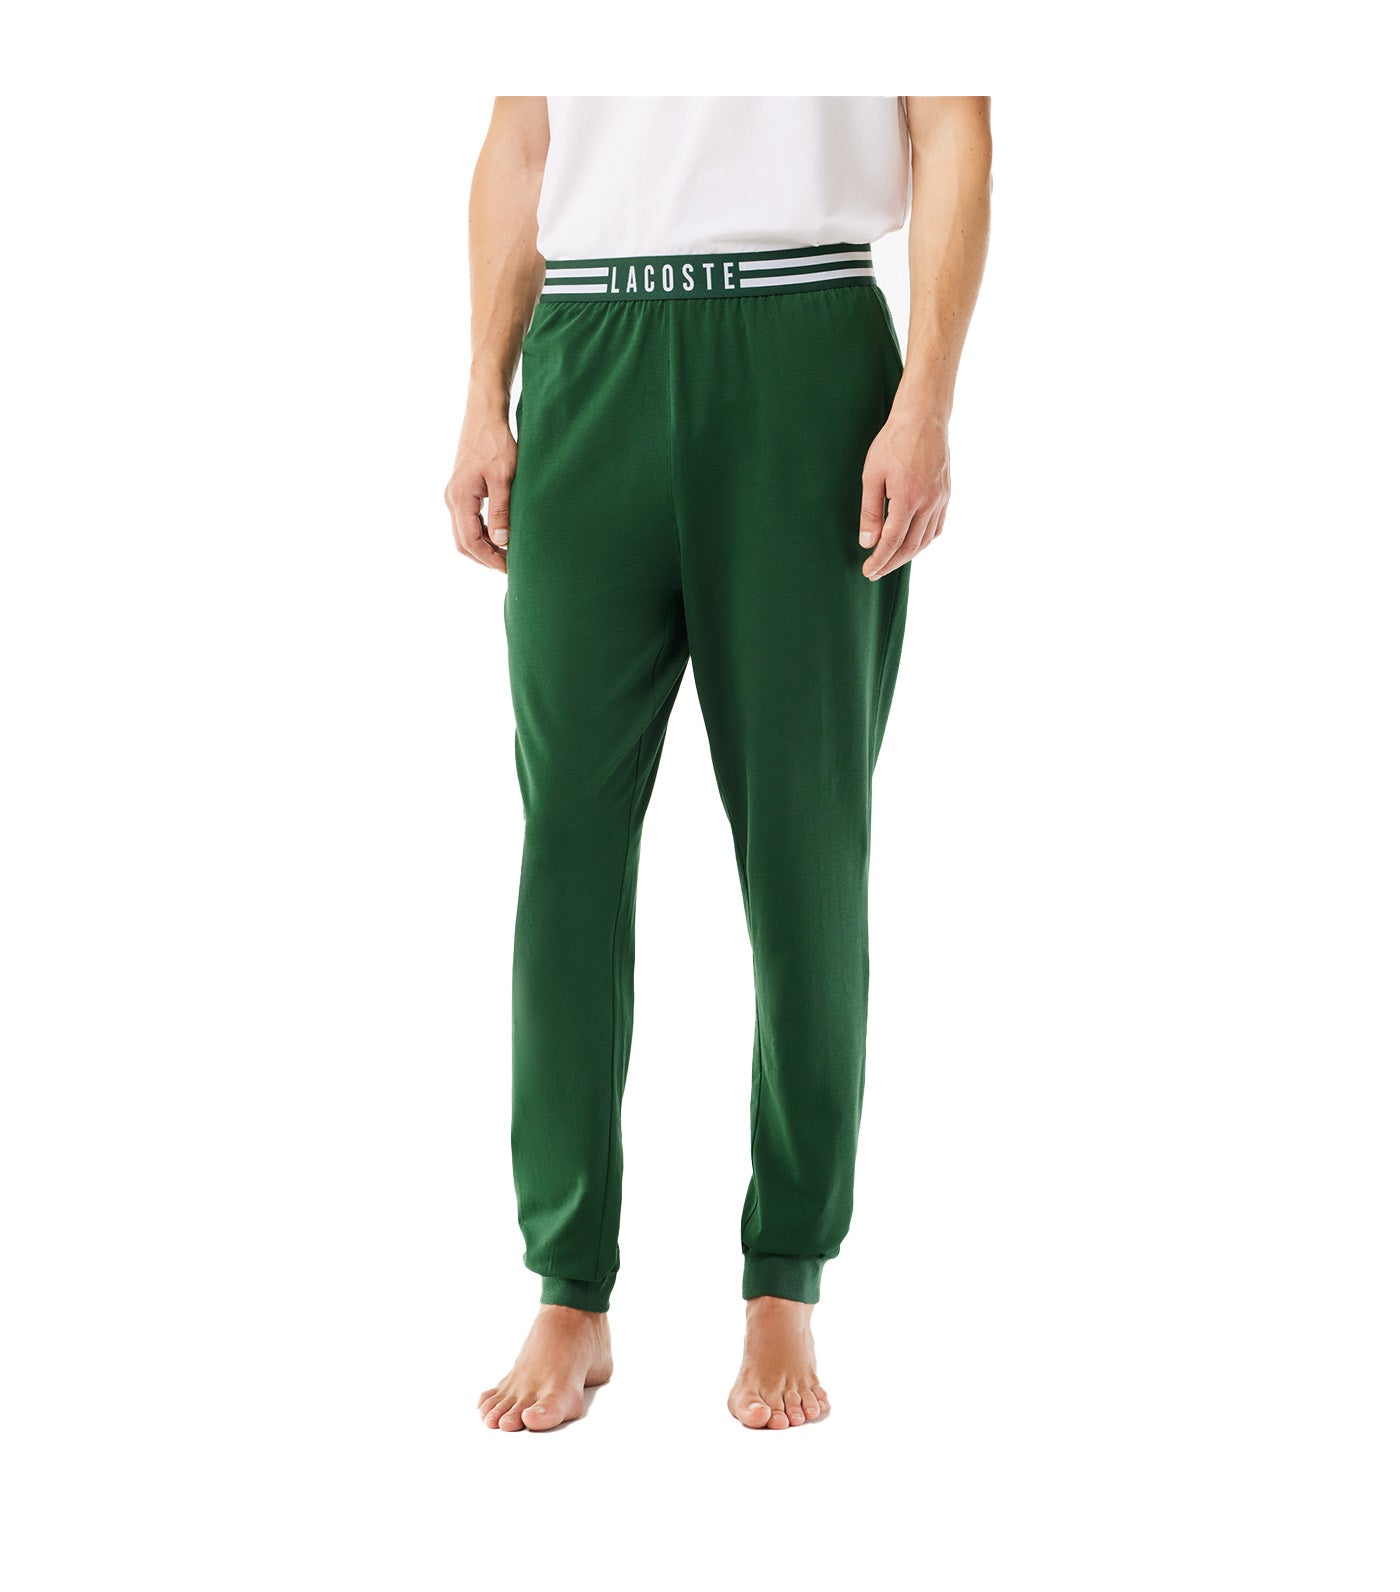 Pajama Set With Contrast Logo Print Pants White/Green